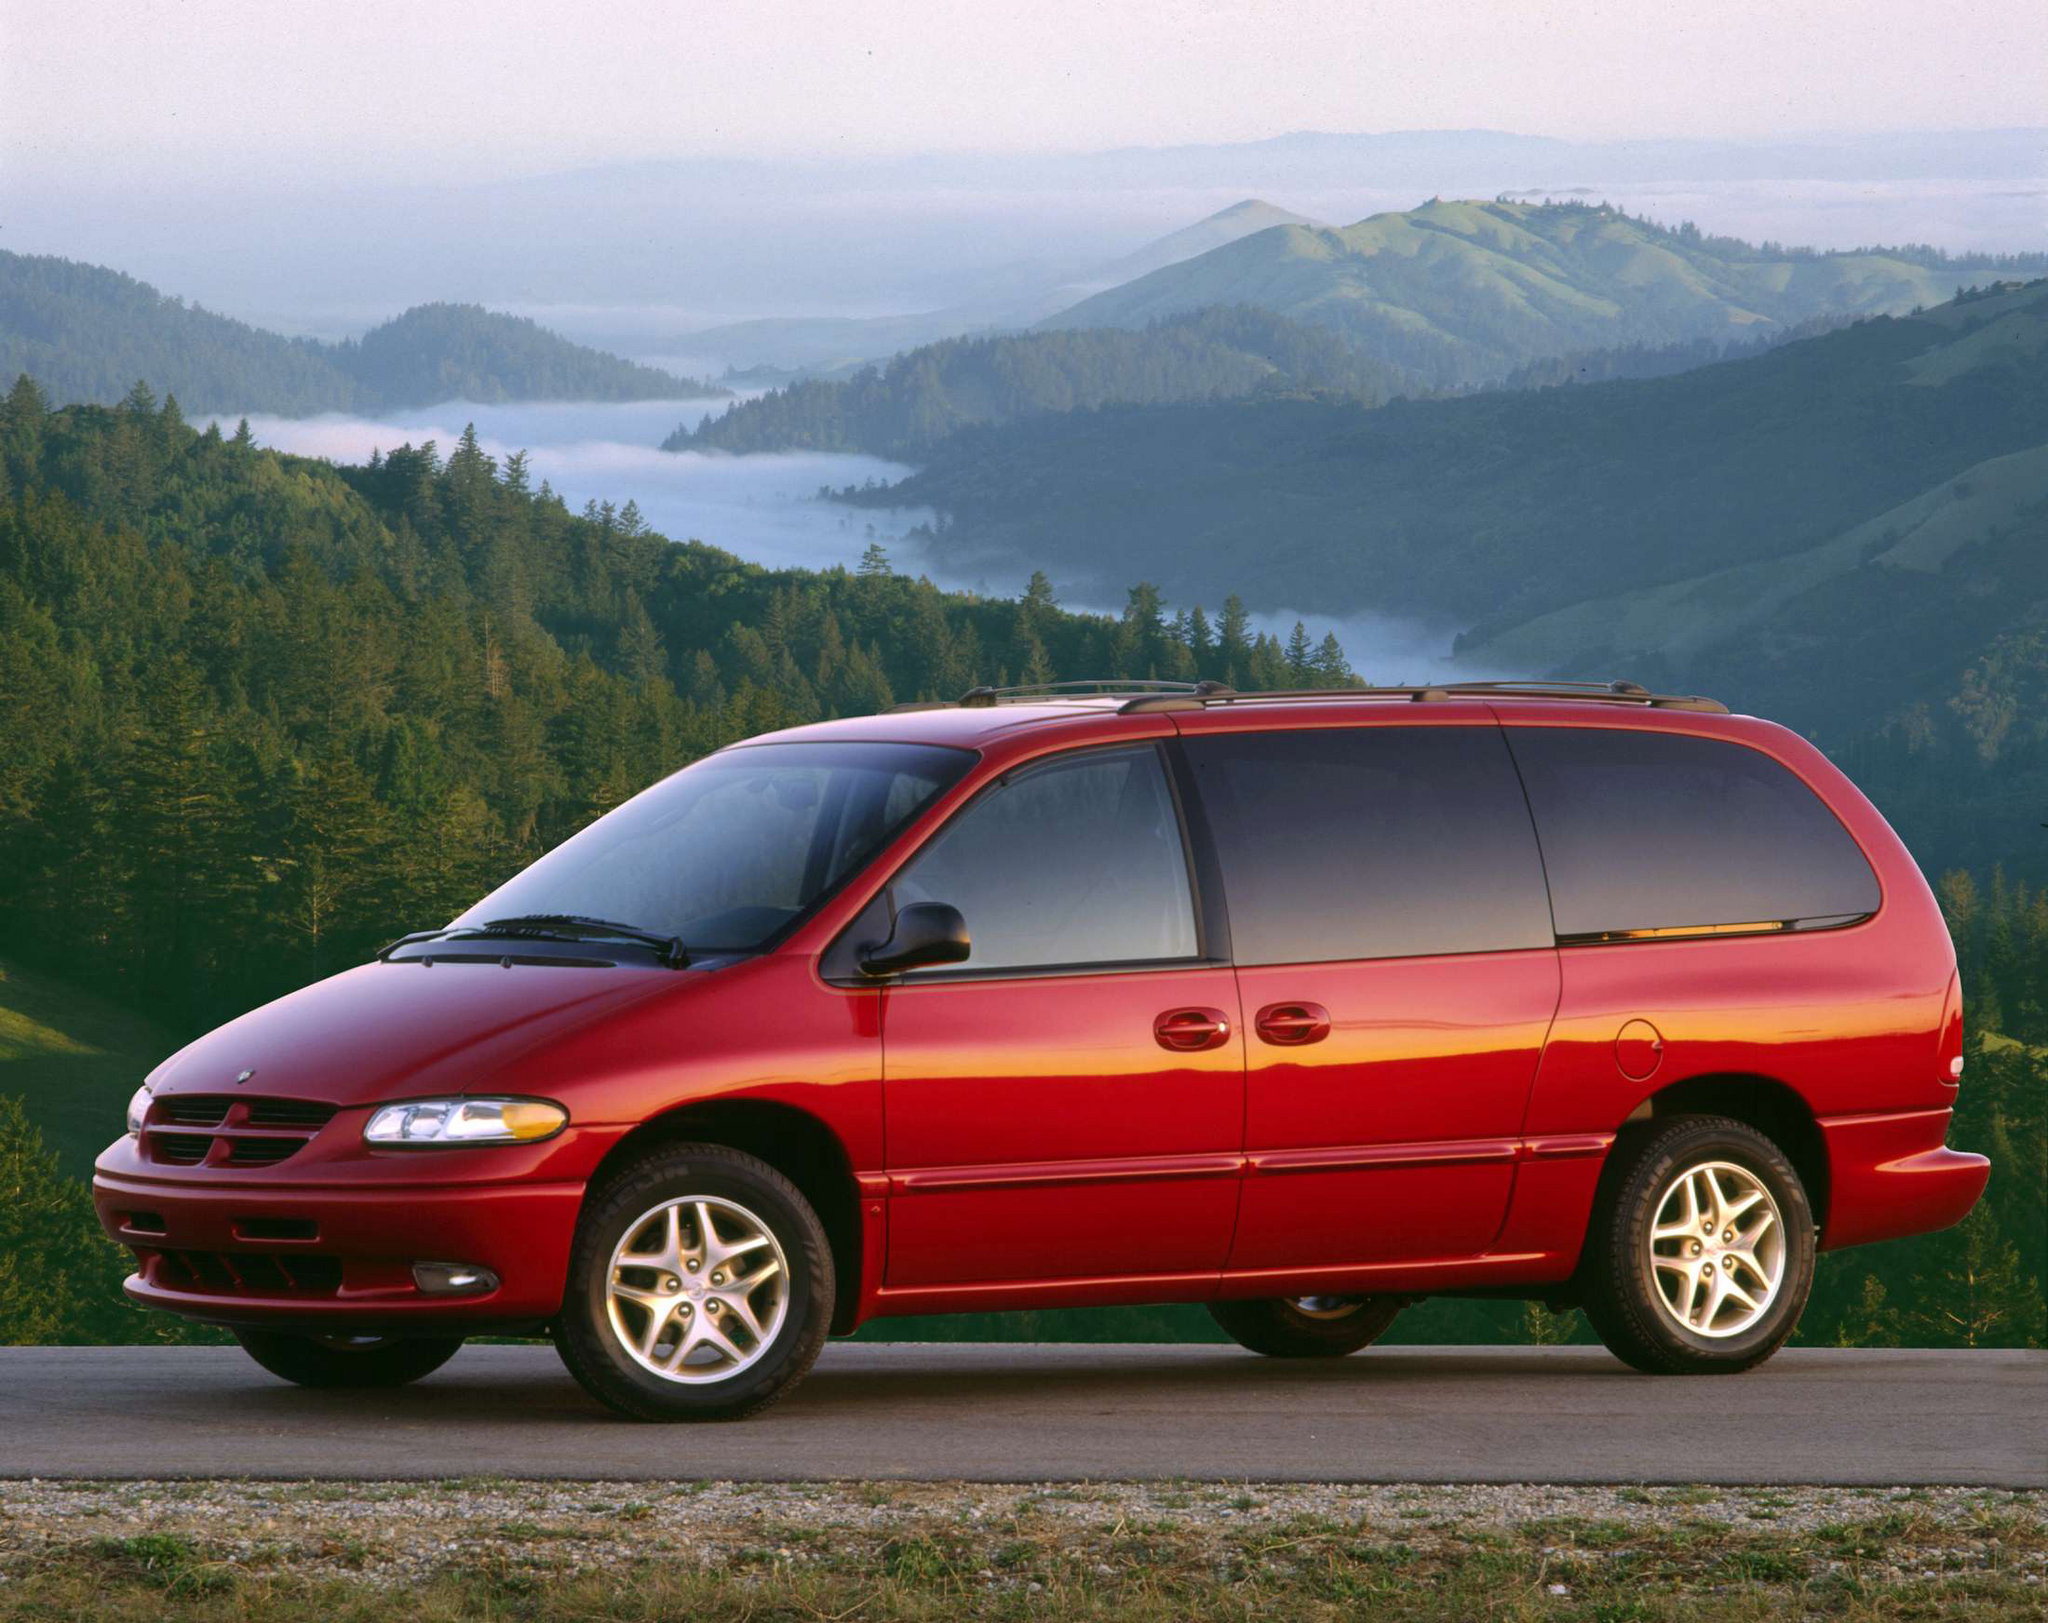 Караван бел. Dodge /Grand/ Caravan 2000. Dodge Grand Caravan 1995. Dodge Caravan 3.3. Dodge Caravan III 1995 – 2000.